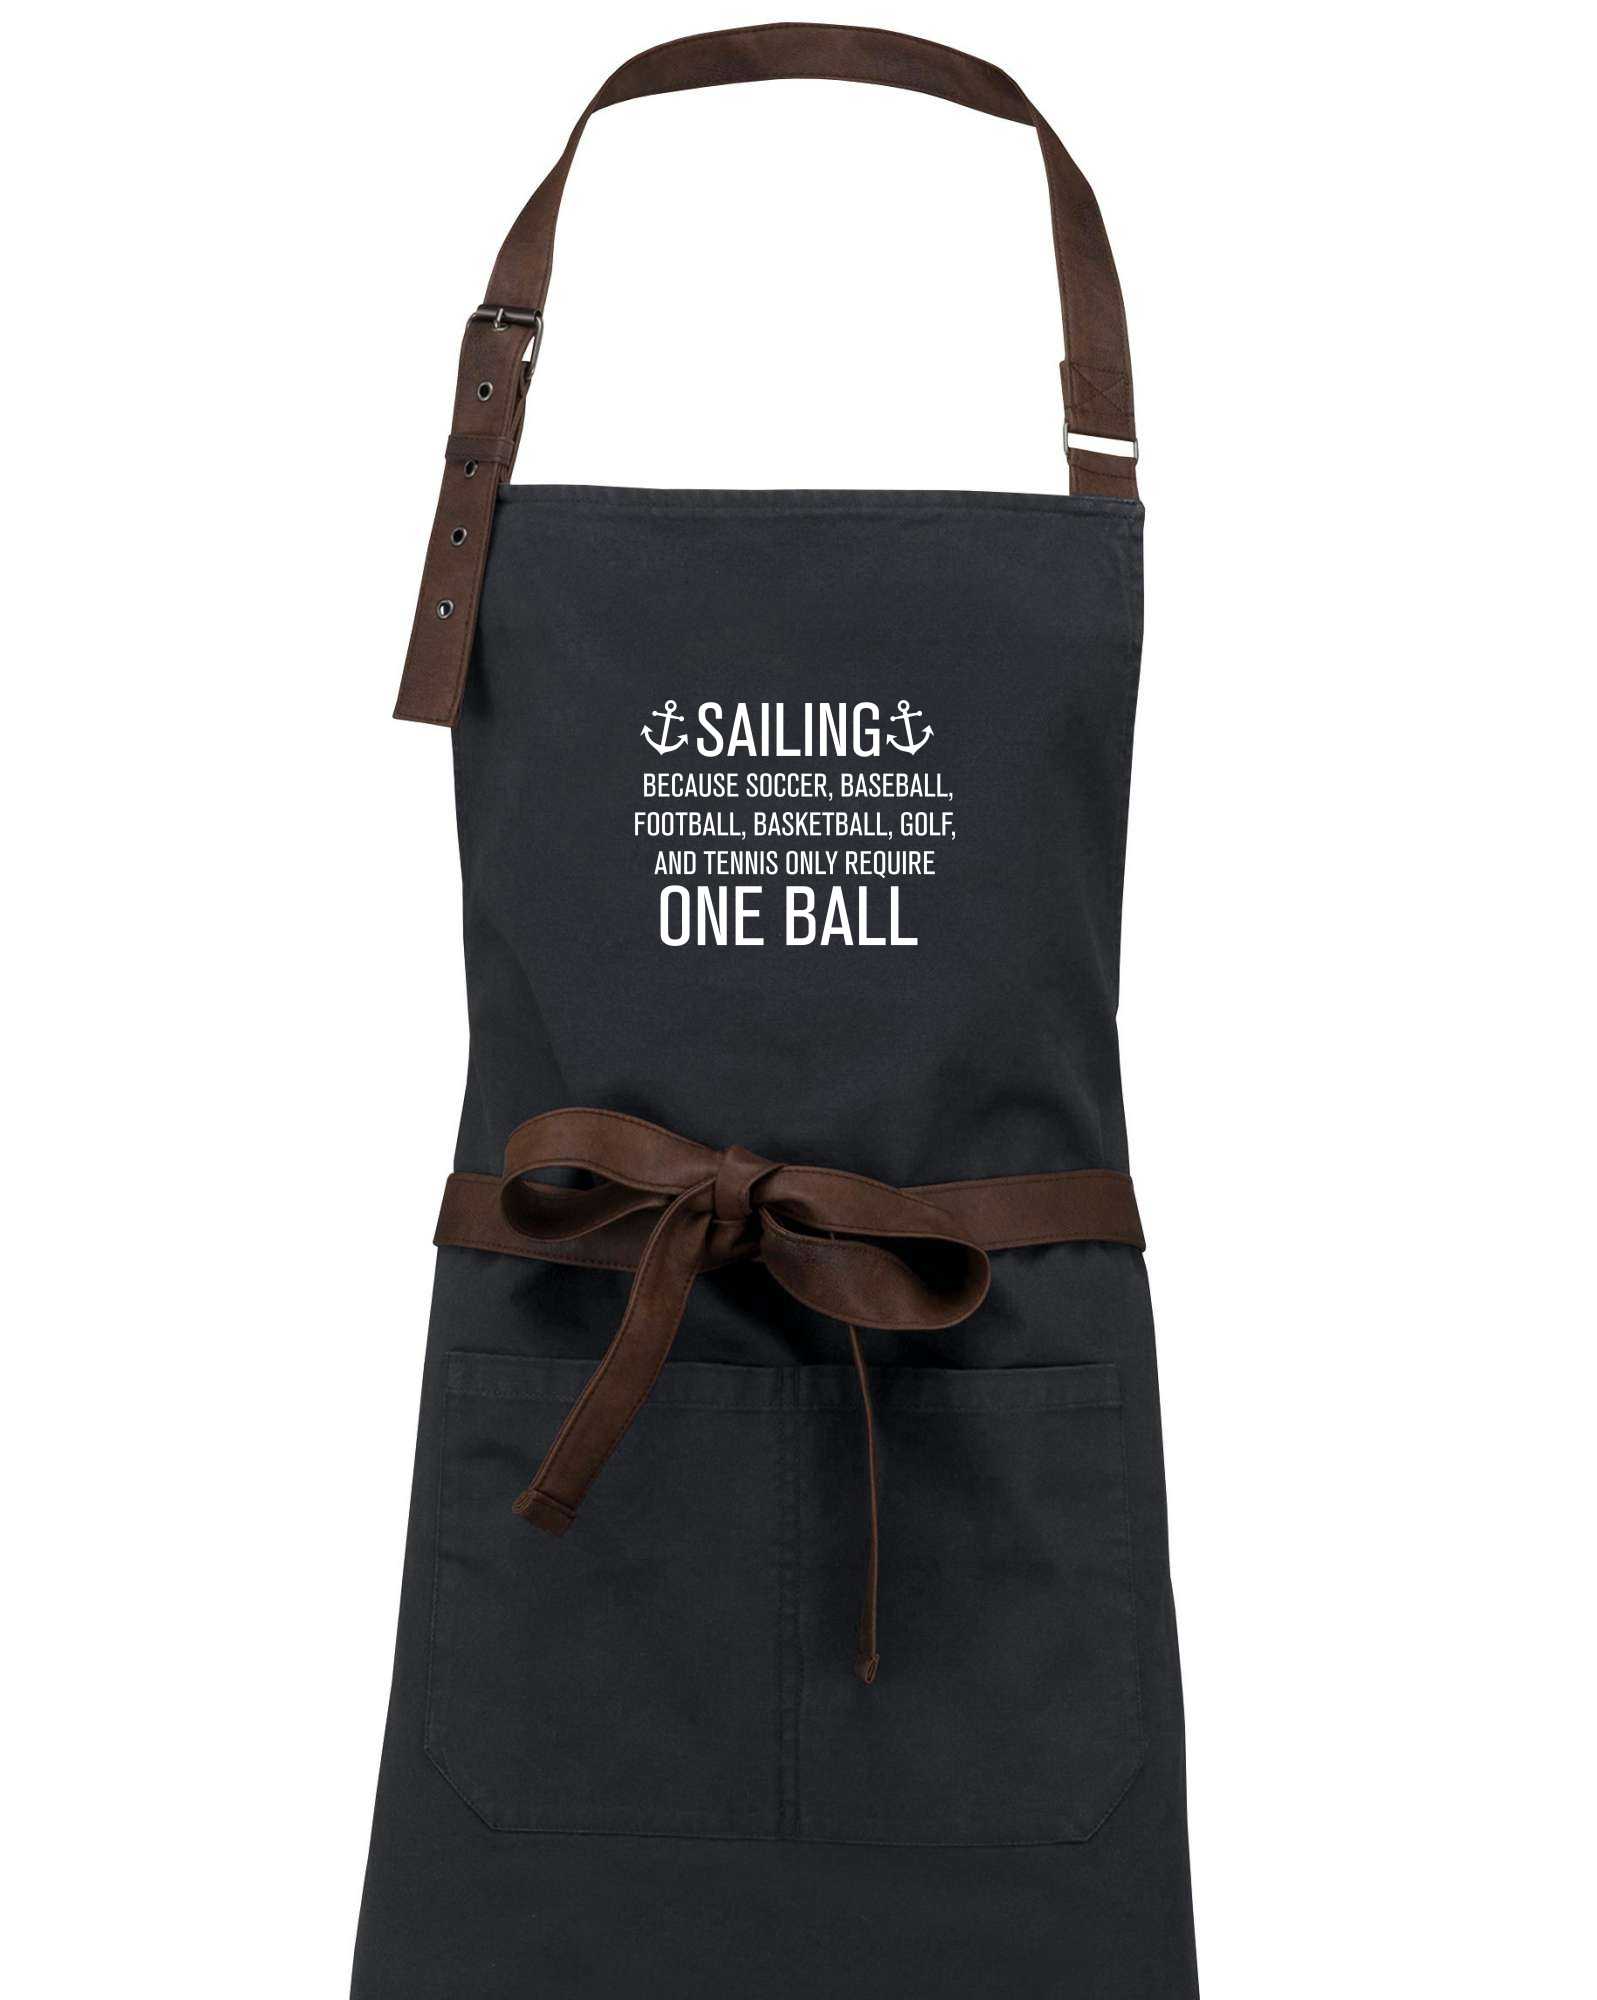 Sailing beacause one ball - Zástěra Vintage